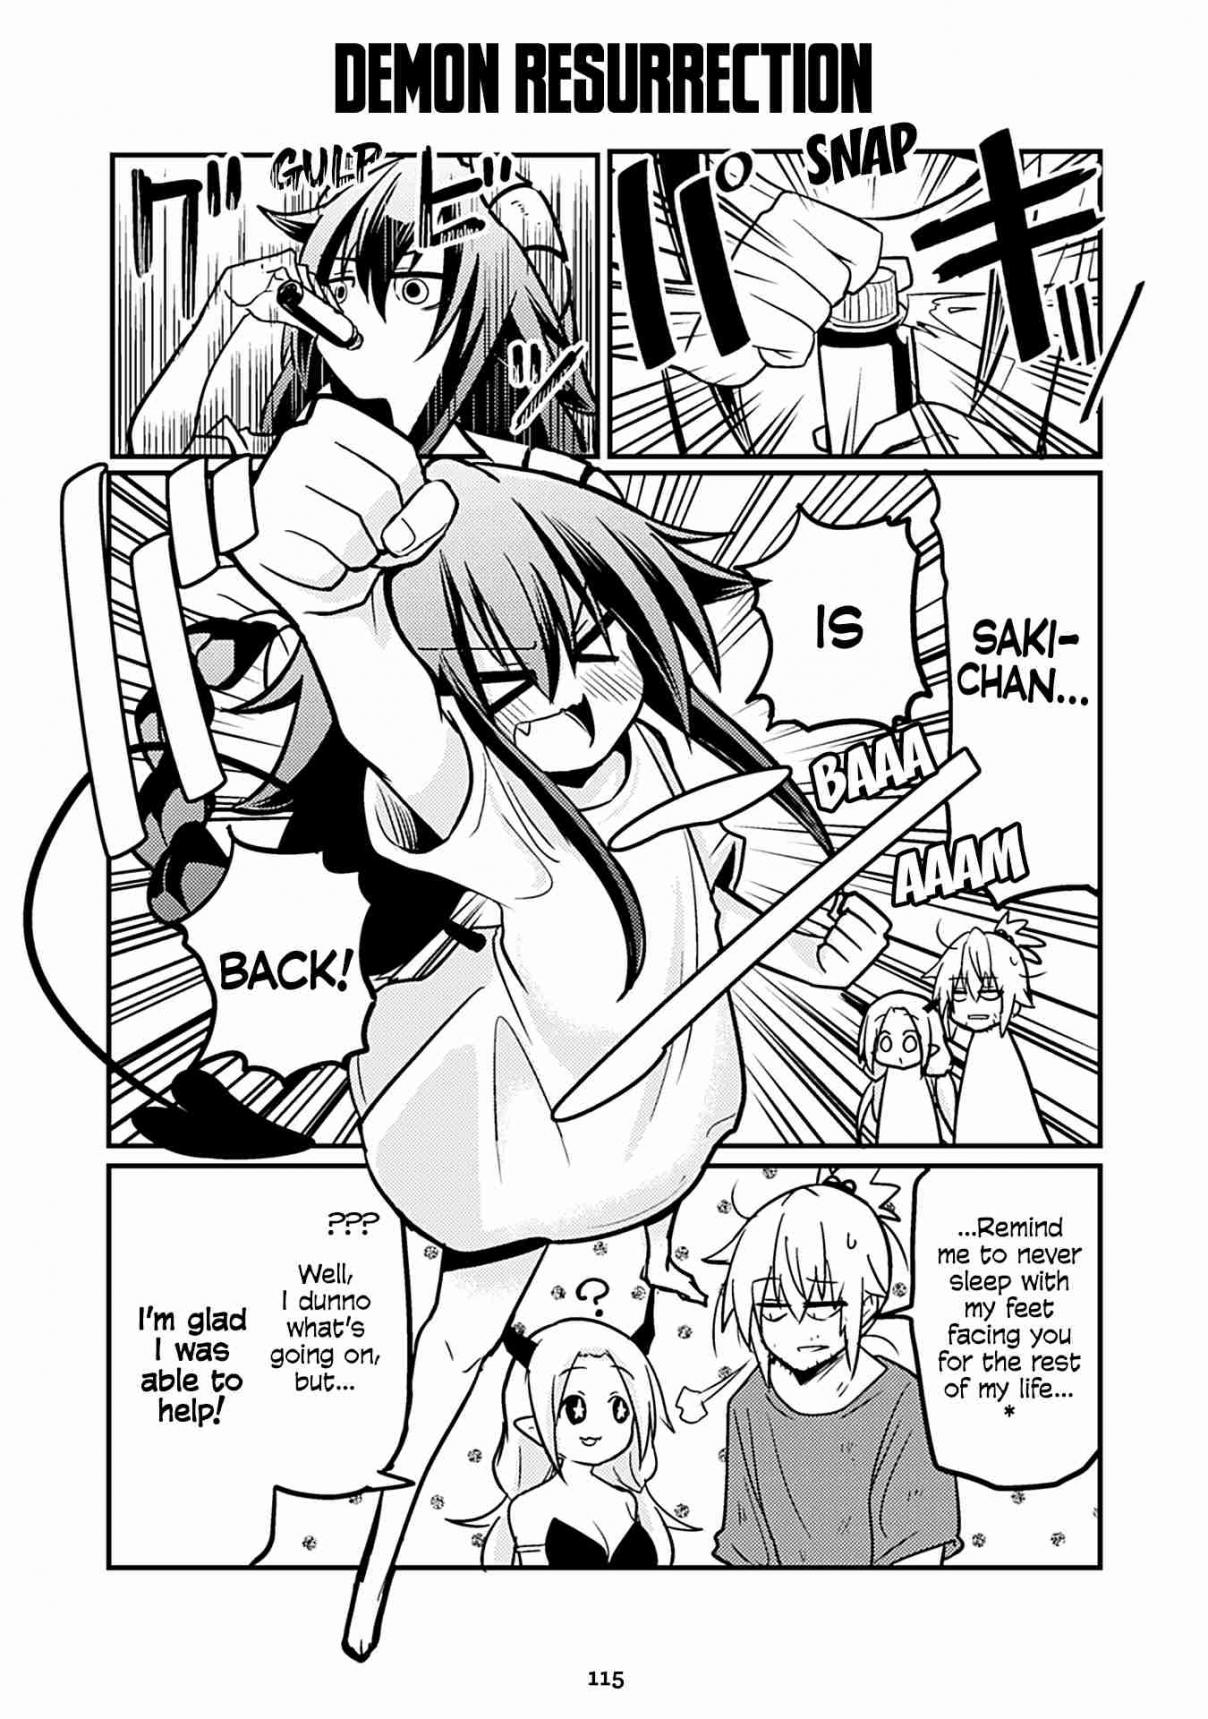 Naughty Succubus "Saki chan" Vol. 2 Ch. 191 Demon resurrection